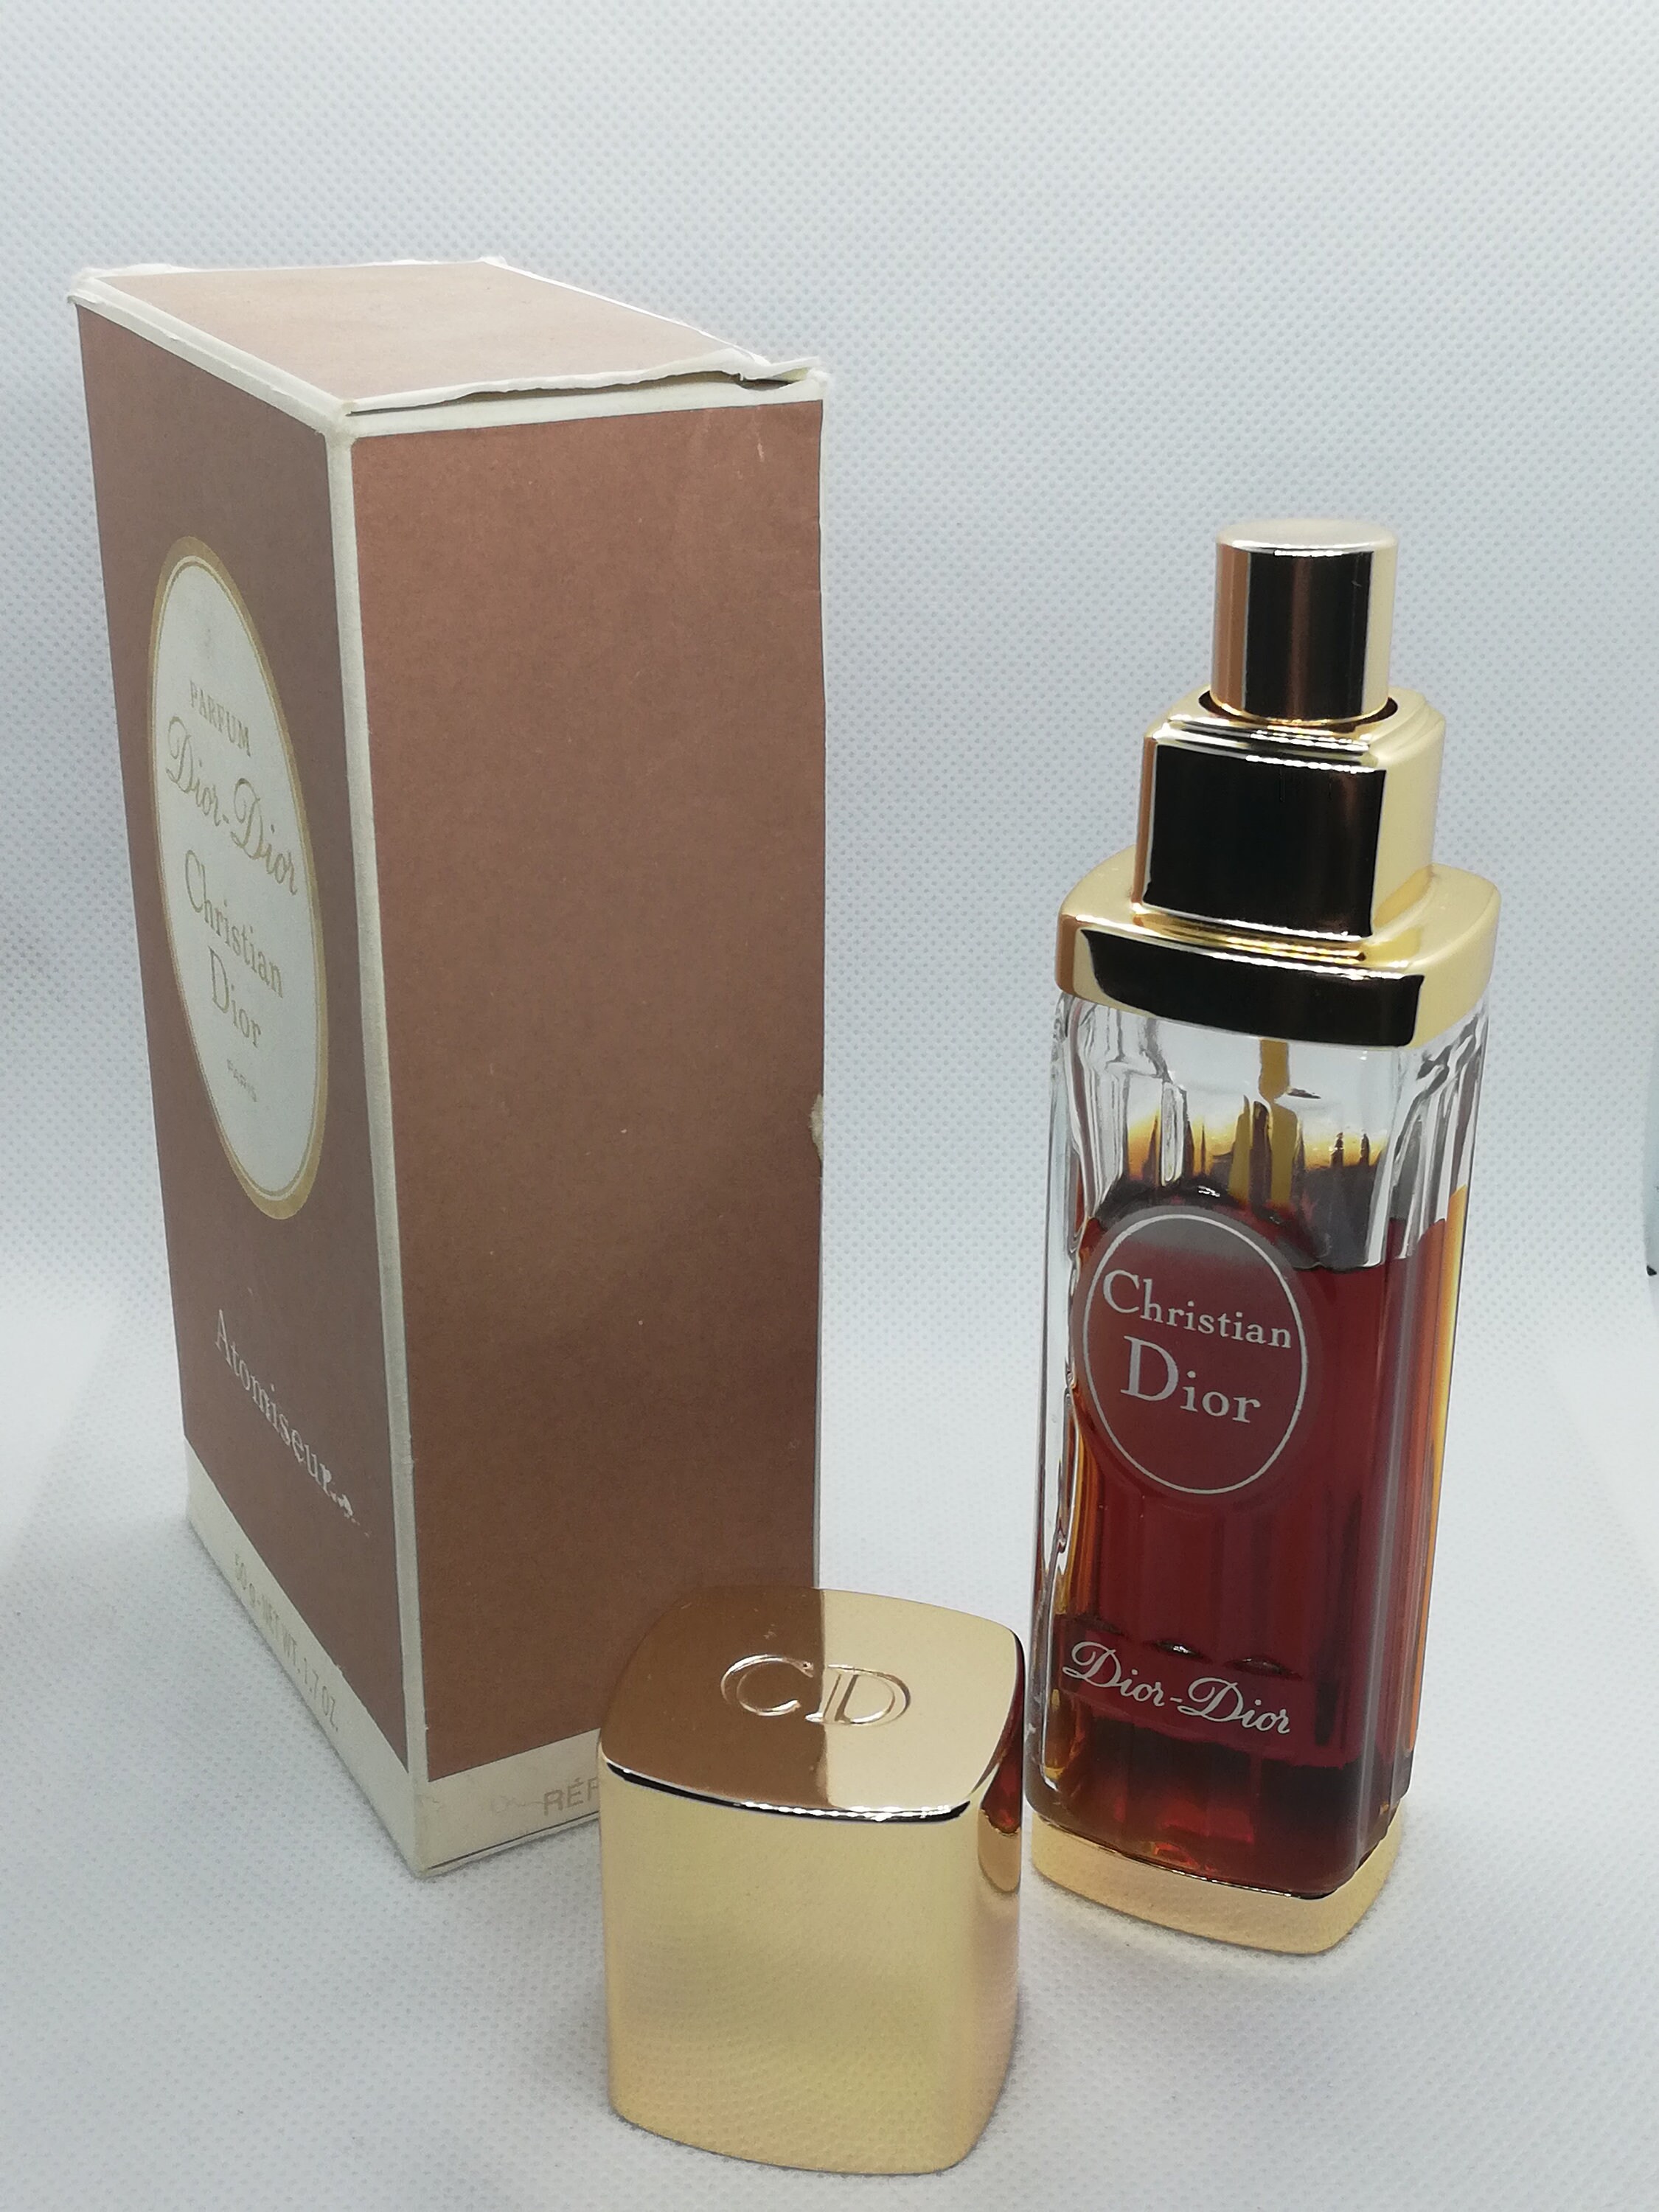 Dior Dior Christian Dior parfum Extrait spray 50 ml 1.7 oz | Etsy